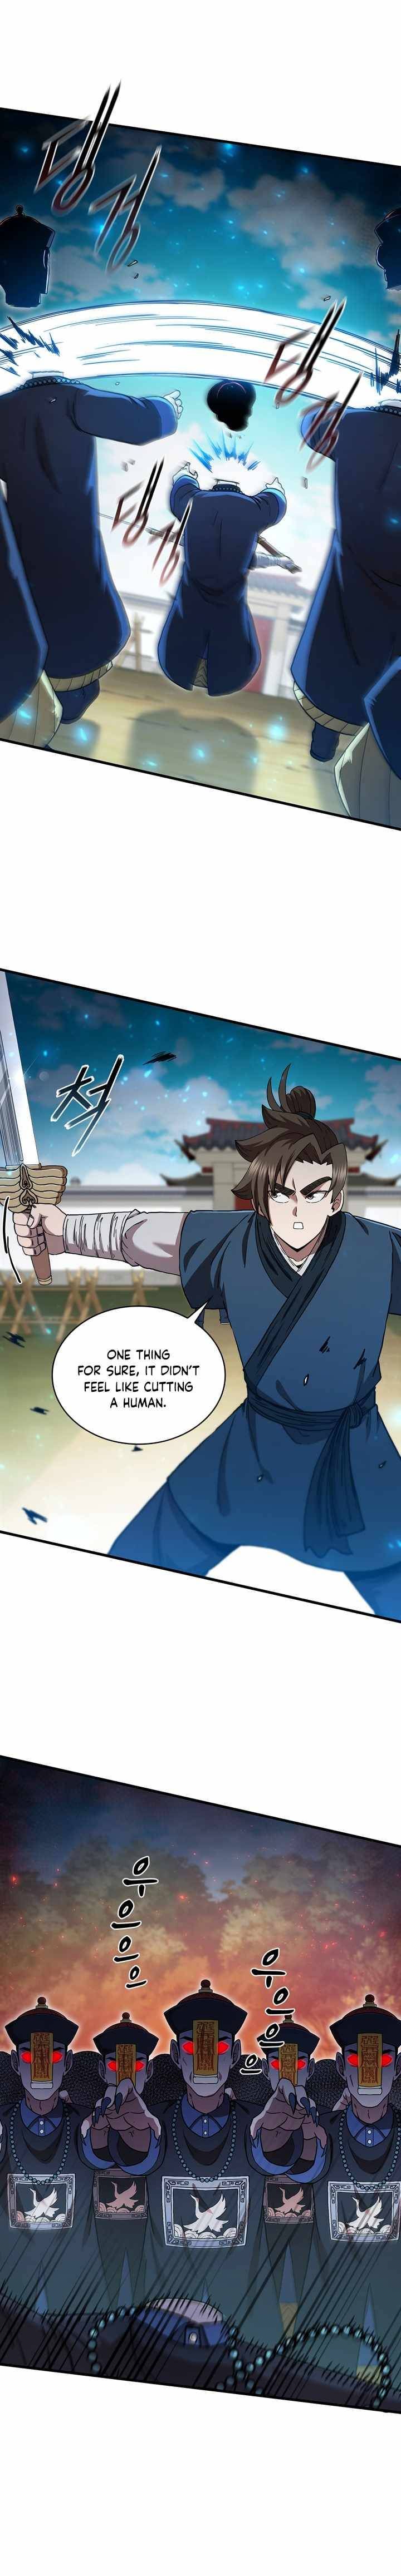 Shinsu Jeil Sword Chapter 70 page 6